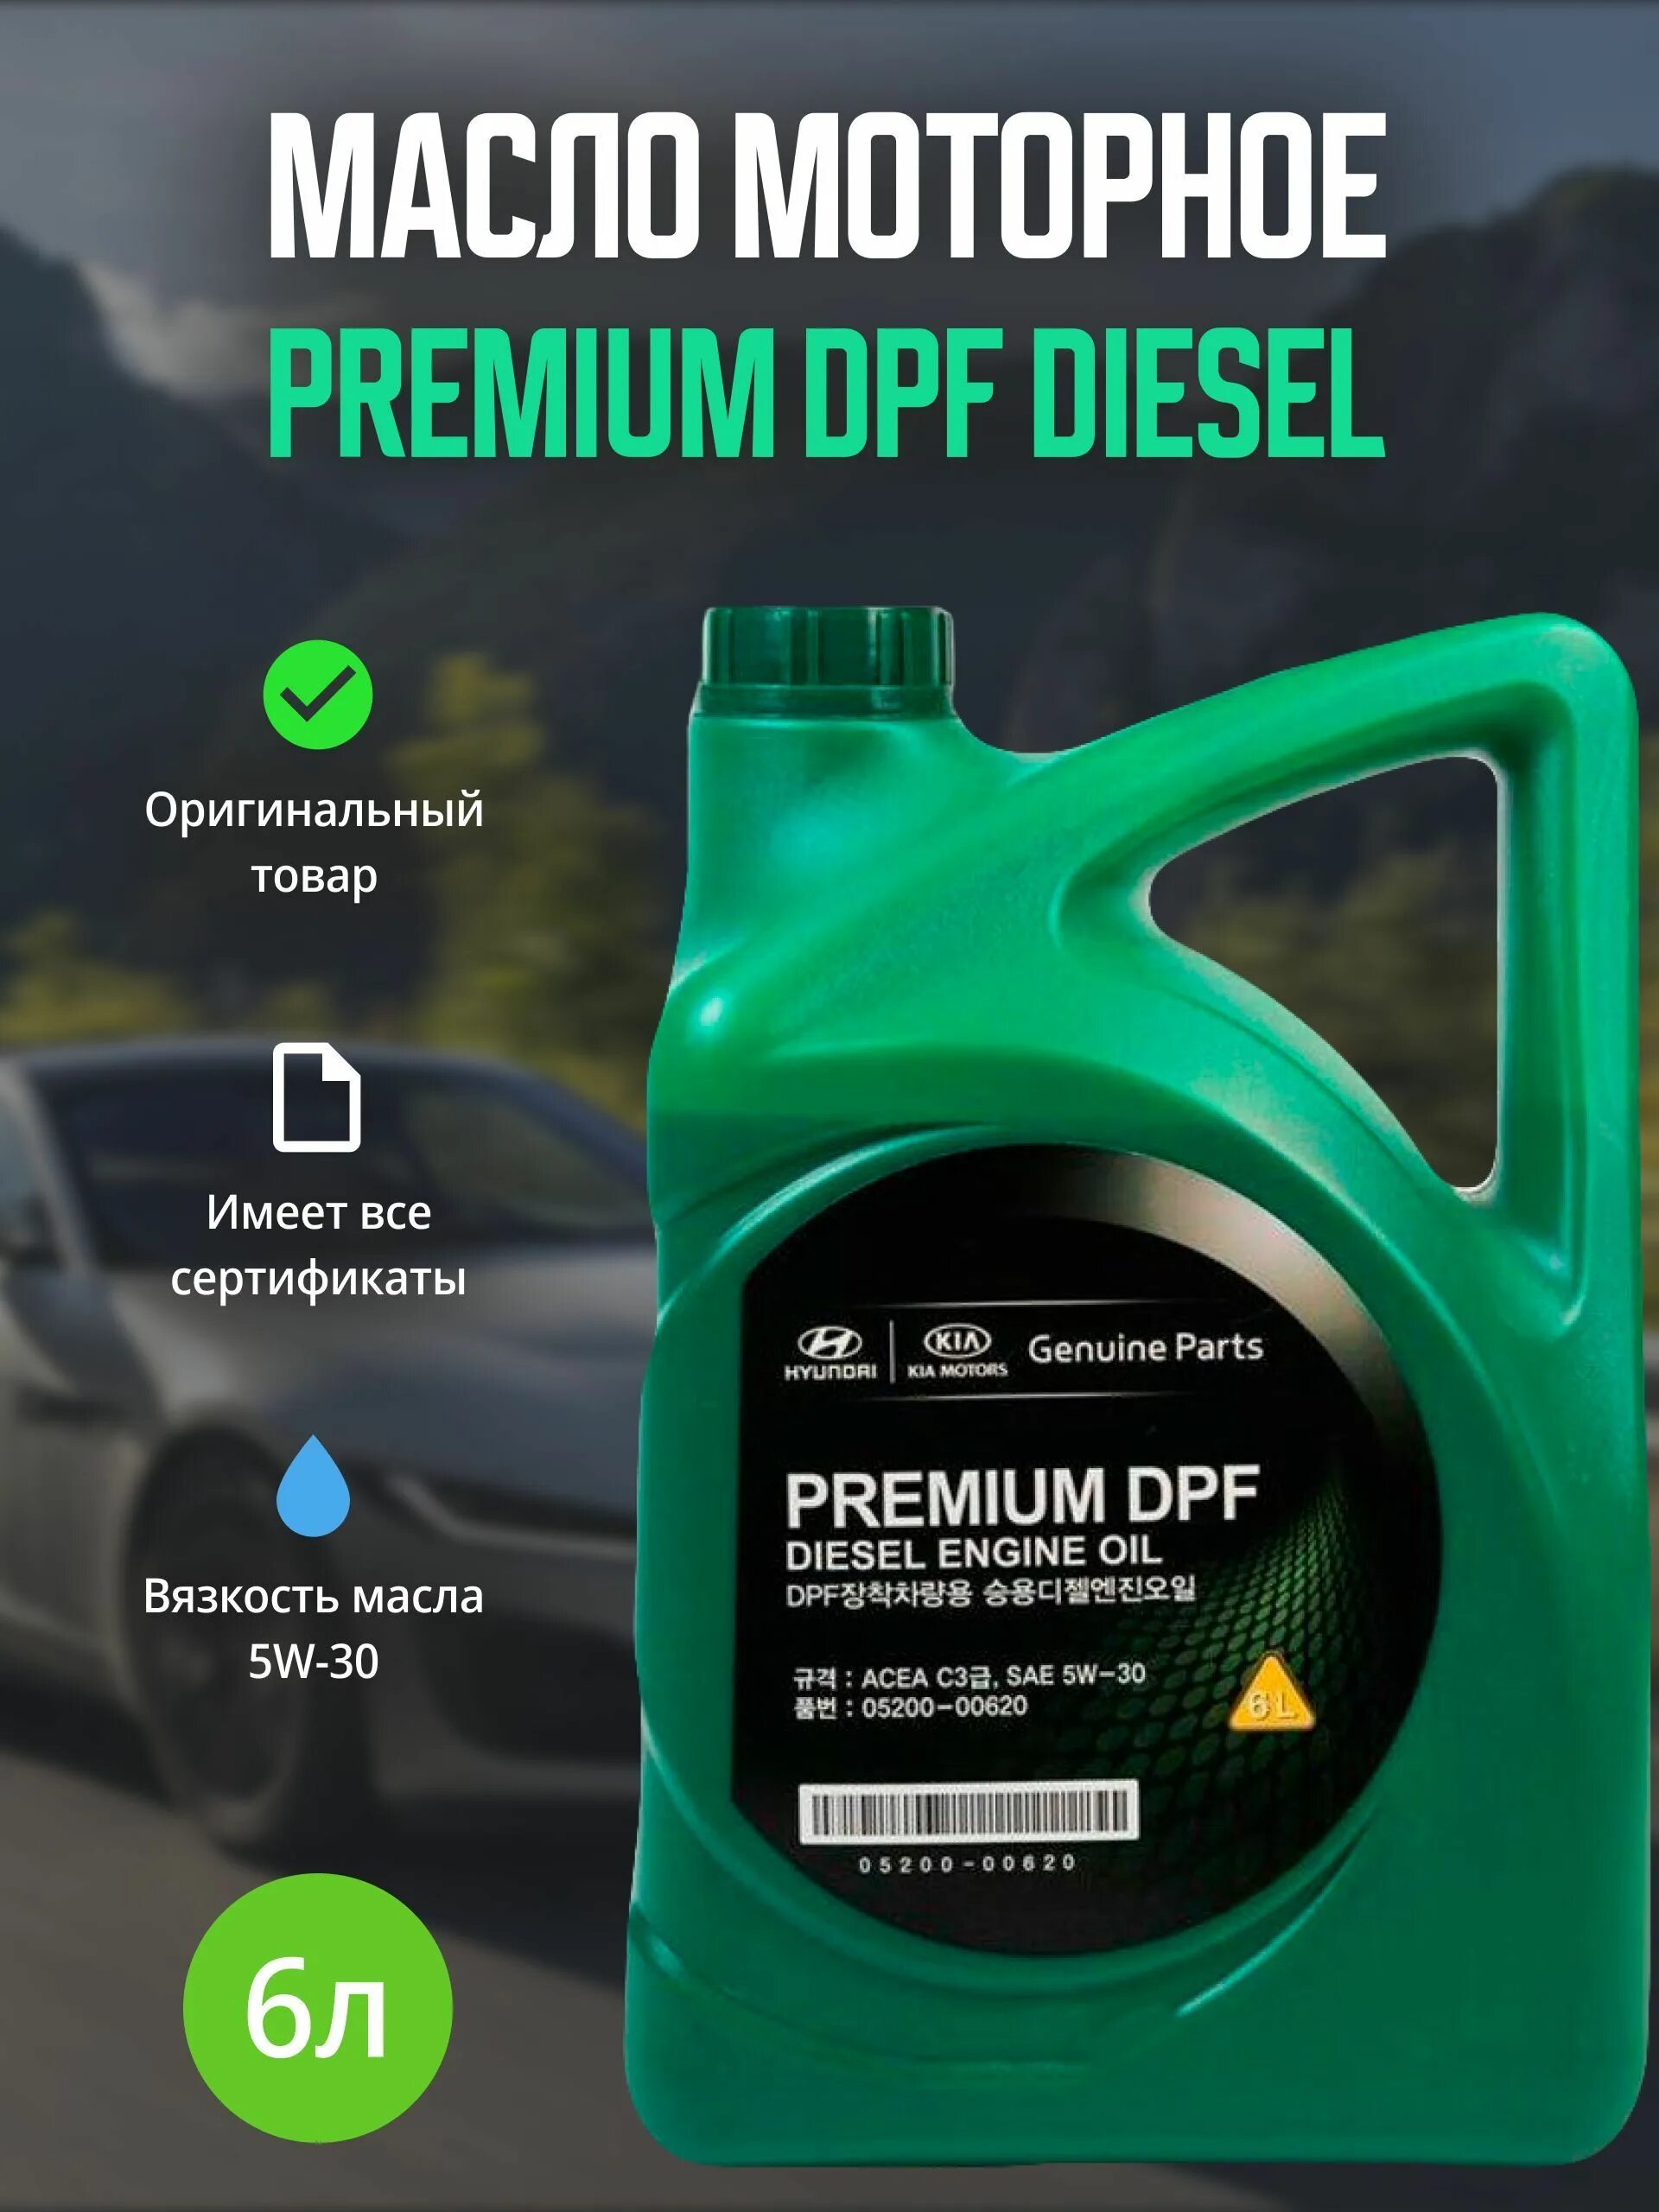 Premium DPF Diesel 5w-30. Hyundai Kia Premium DPF 5w-30 6 л. 05200-00620 5w30 масло моторное Premium DPF Diesel 6л. Hyundai. Масло Хендай оригинал дизель.